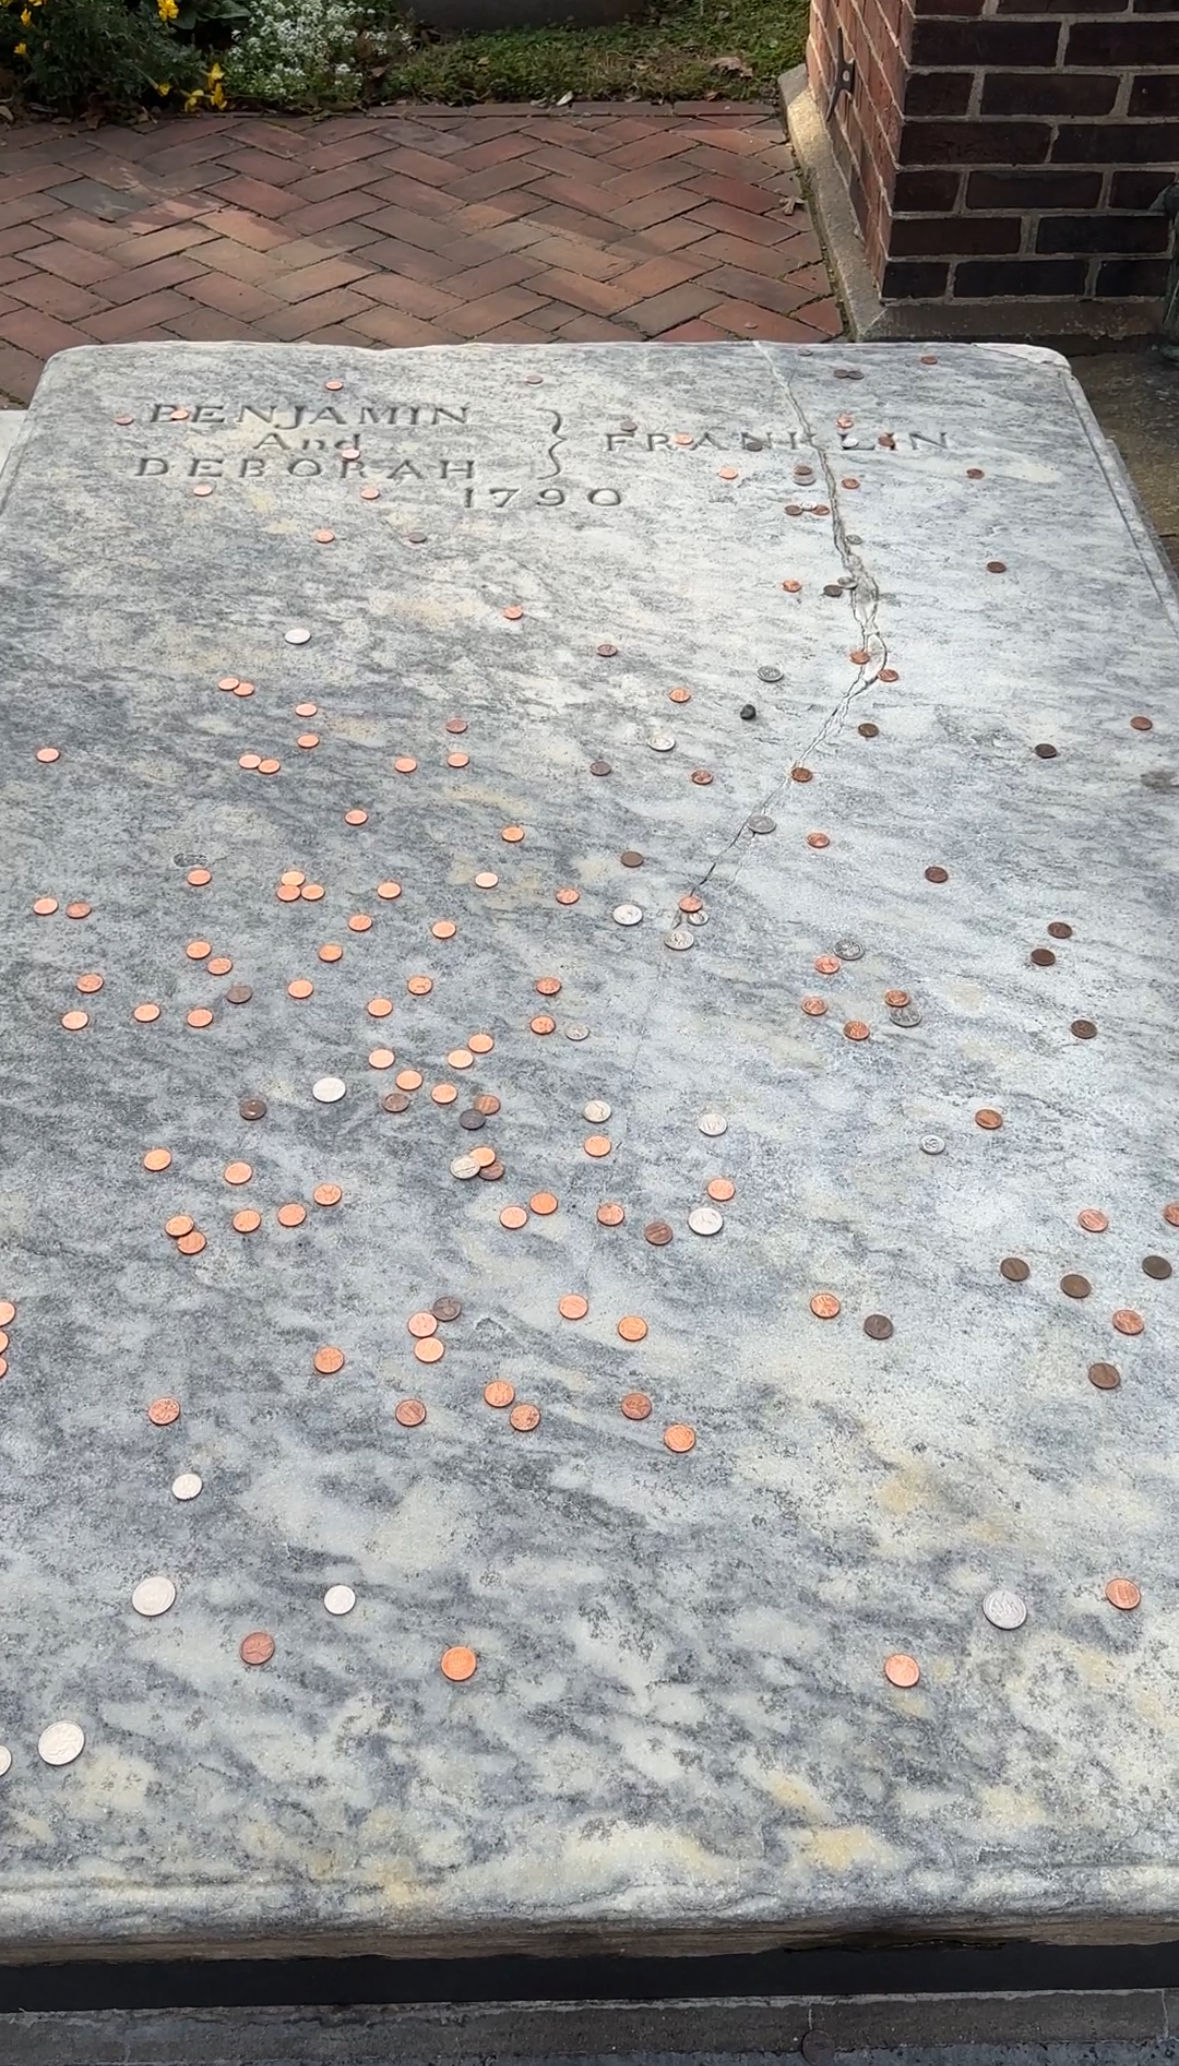 Benjamin Franklin's Grave at Christ Church Burial Ground, PA, taphophile, tourism, dark tourism